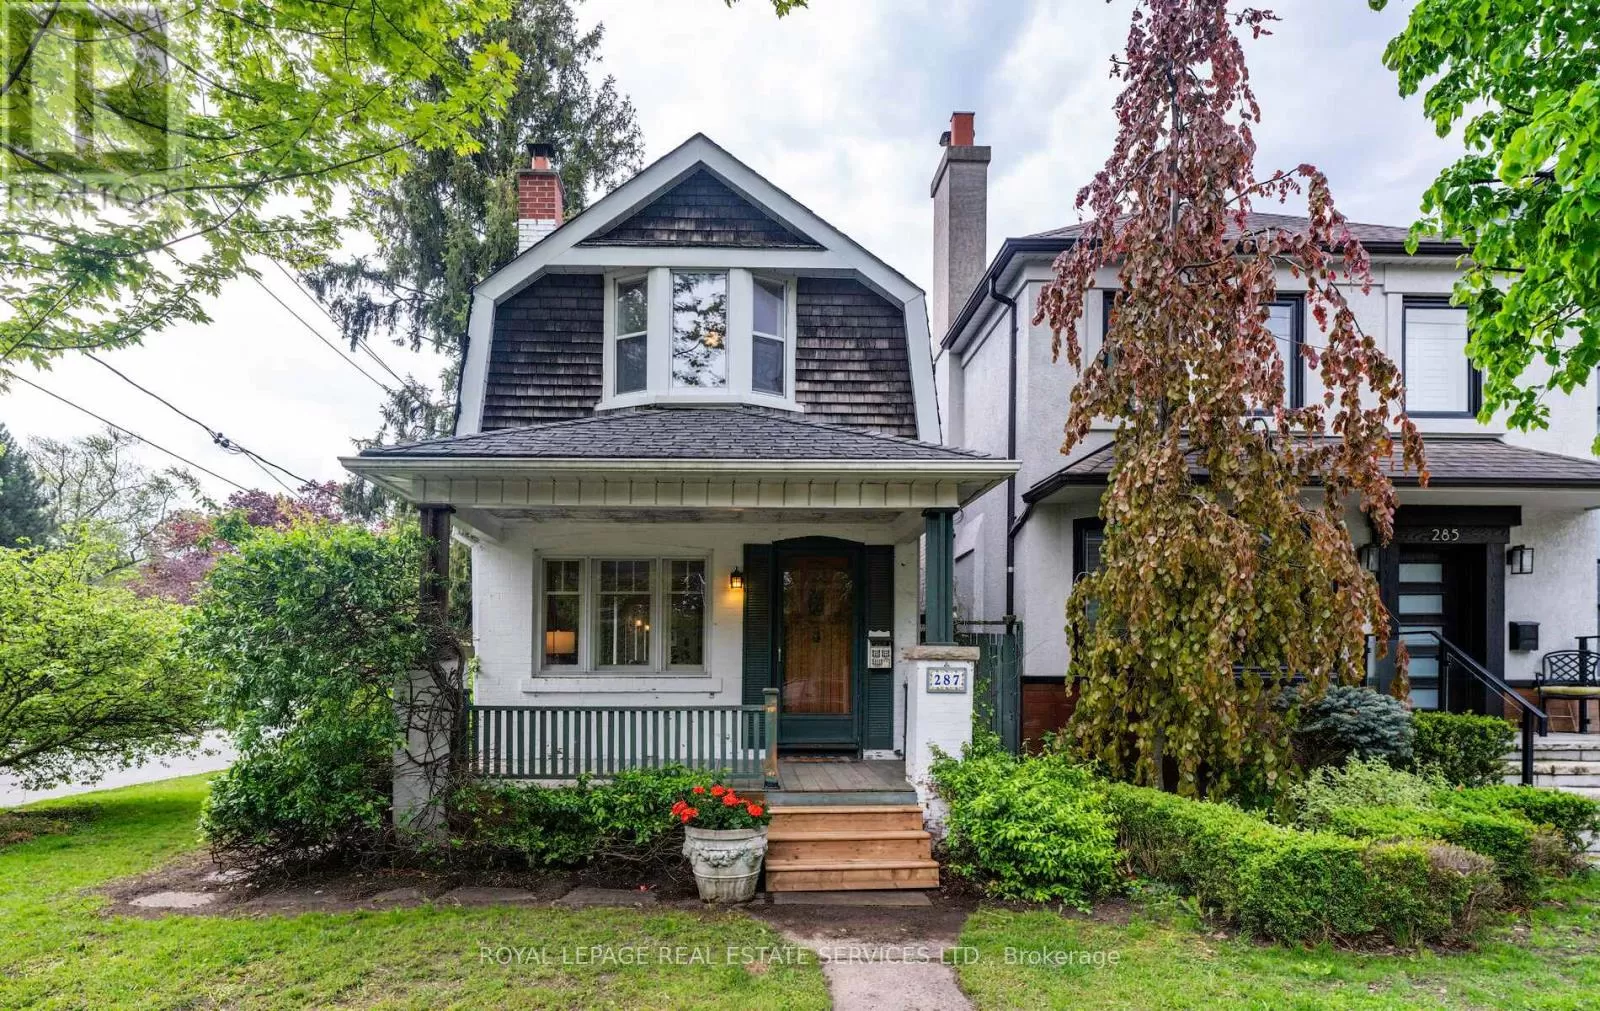 House for rent: 287 Snowdon Avenue, Toronto, Ontario M4N 2B4